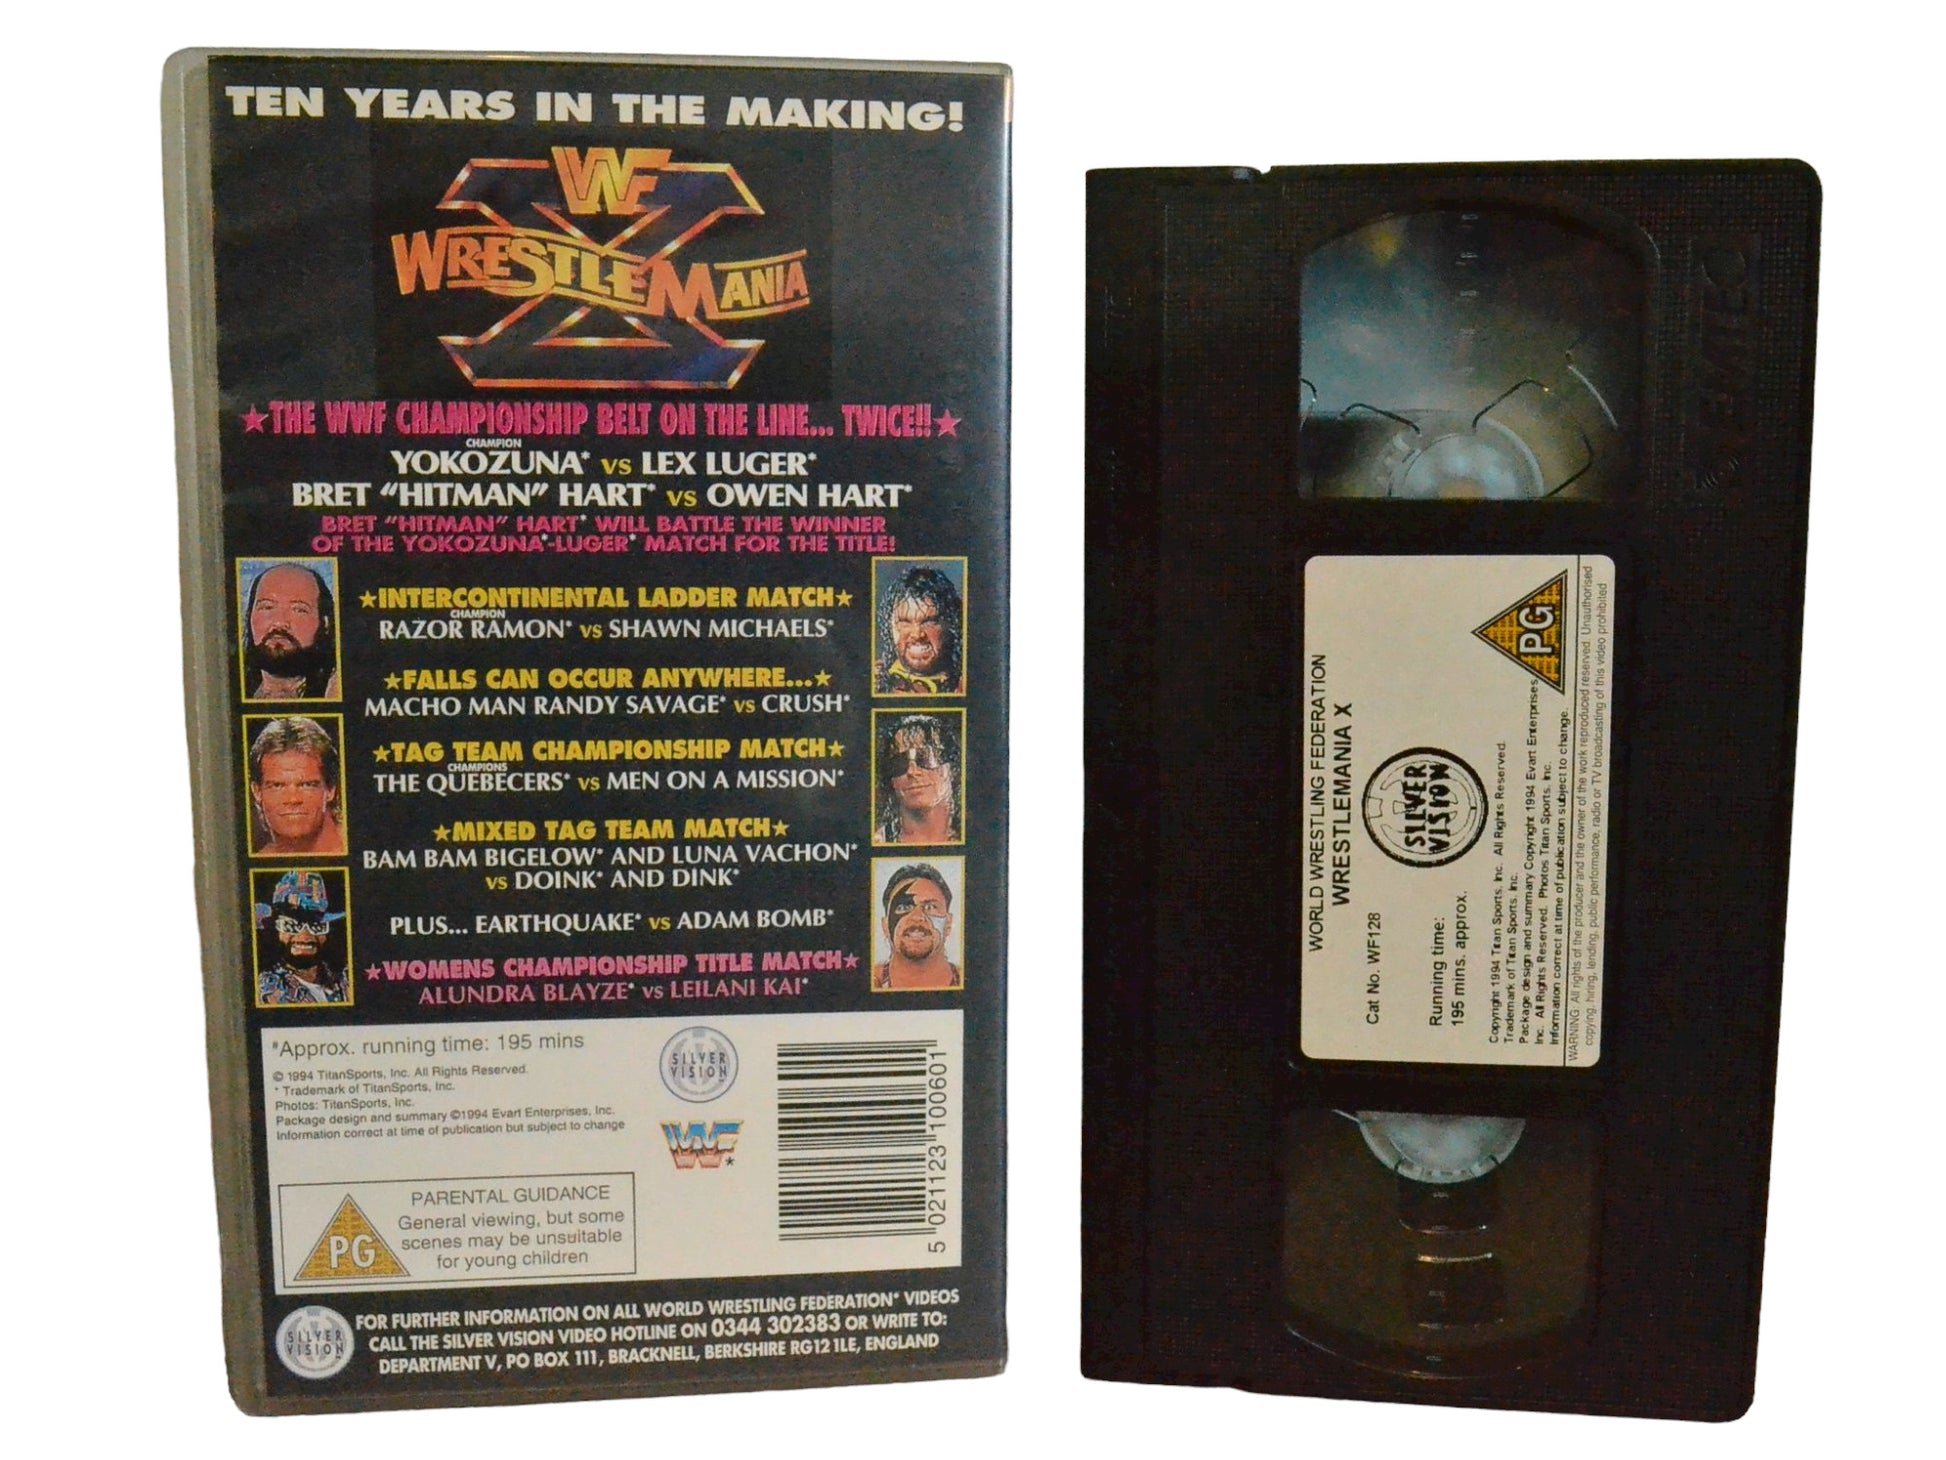 WWF: Wrestle Mania X - Bryan Danielson - World Wrestling Federation Home Video - Wrestling - PAL - VHS-